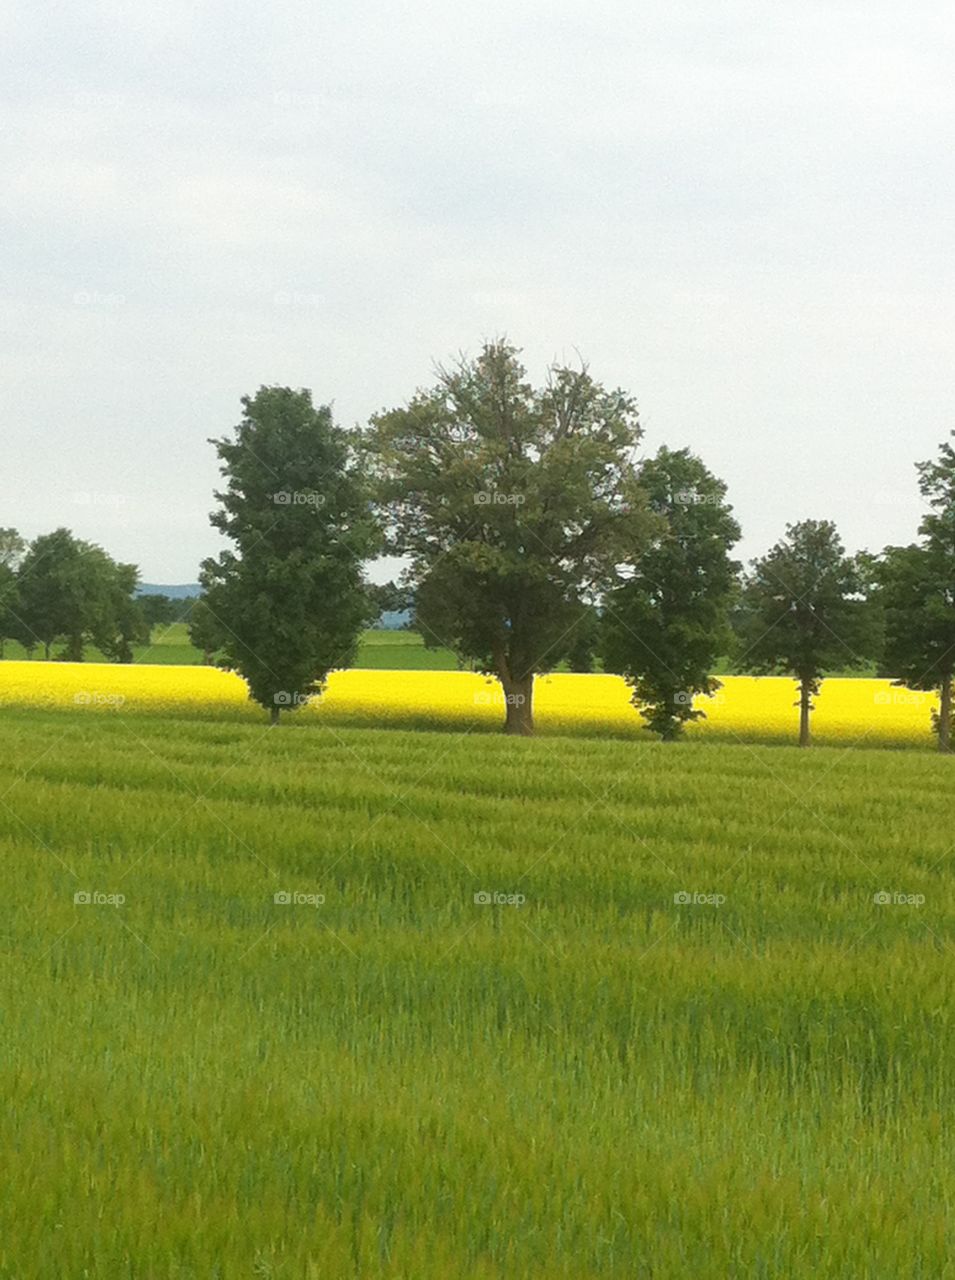 Farm field in Summer. A beautiful display of a farm field in bloom